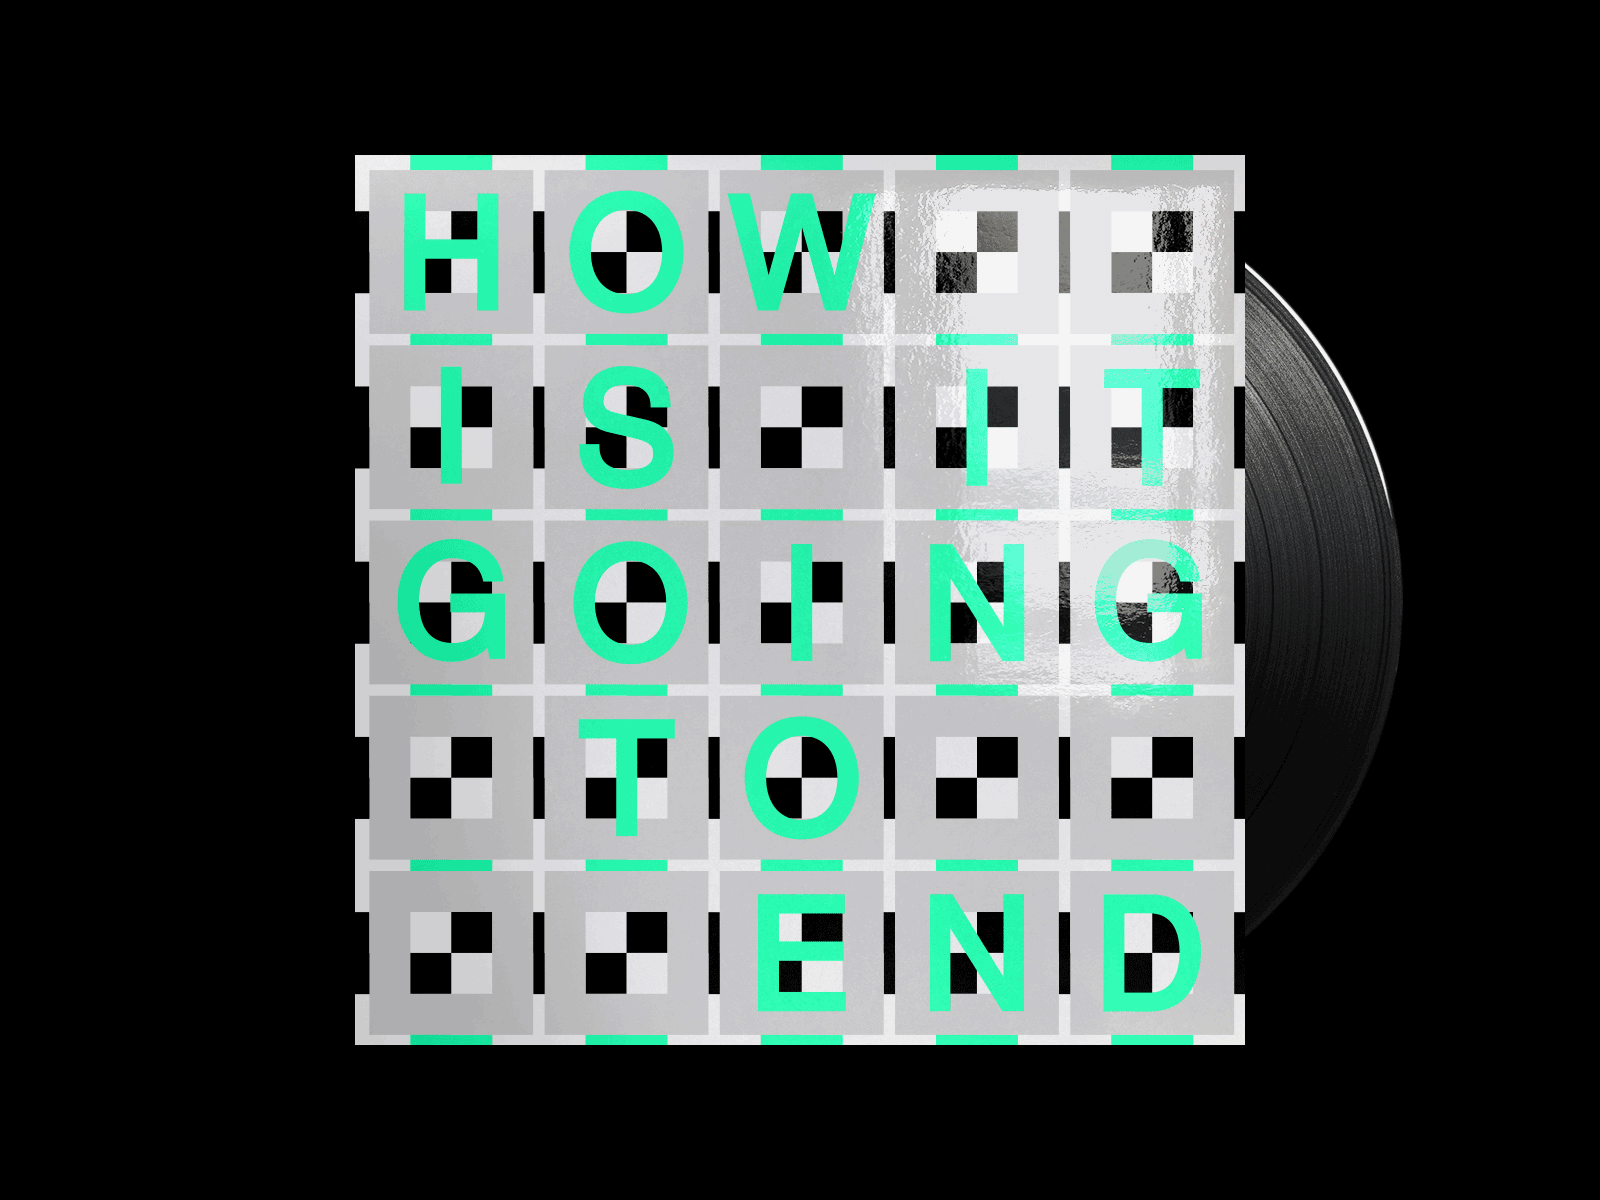 How Is It Going To End - Album artwork concept album art album cover artwork cover ep lp music record vinyl cover vinyl wrap